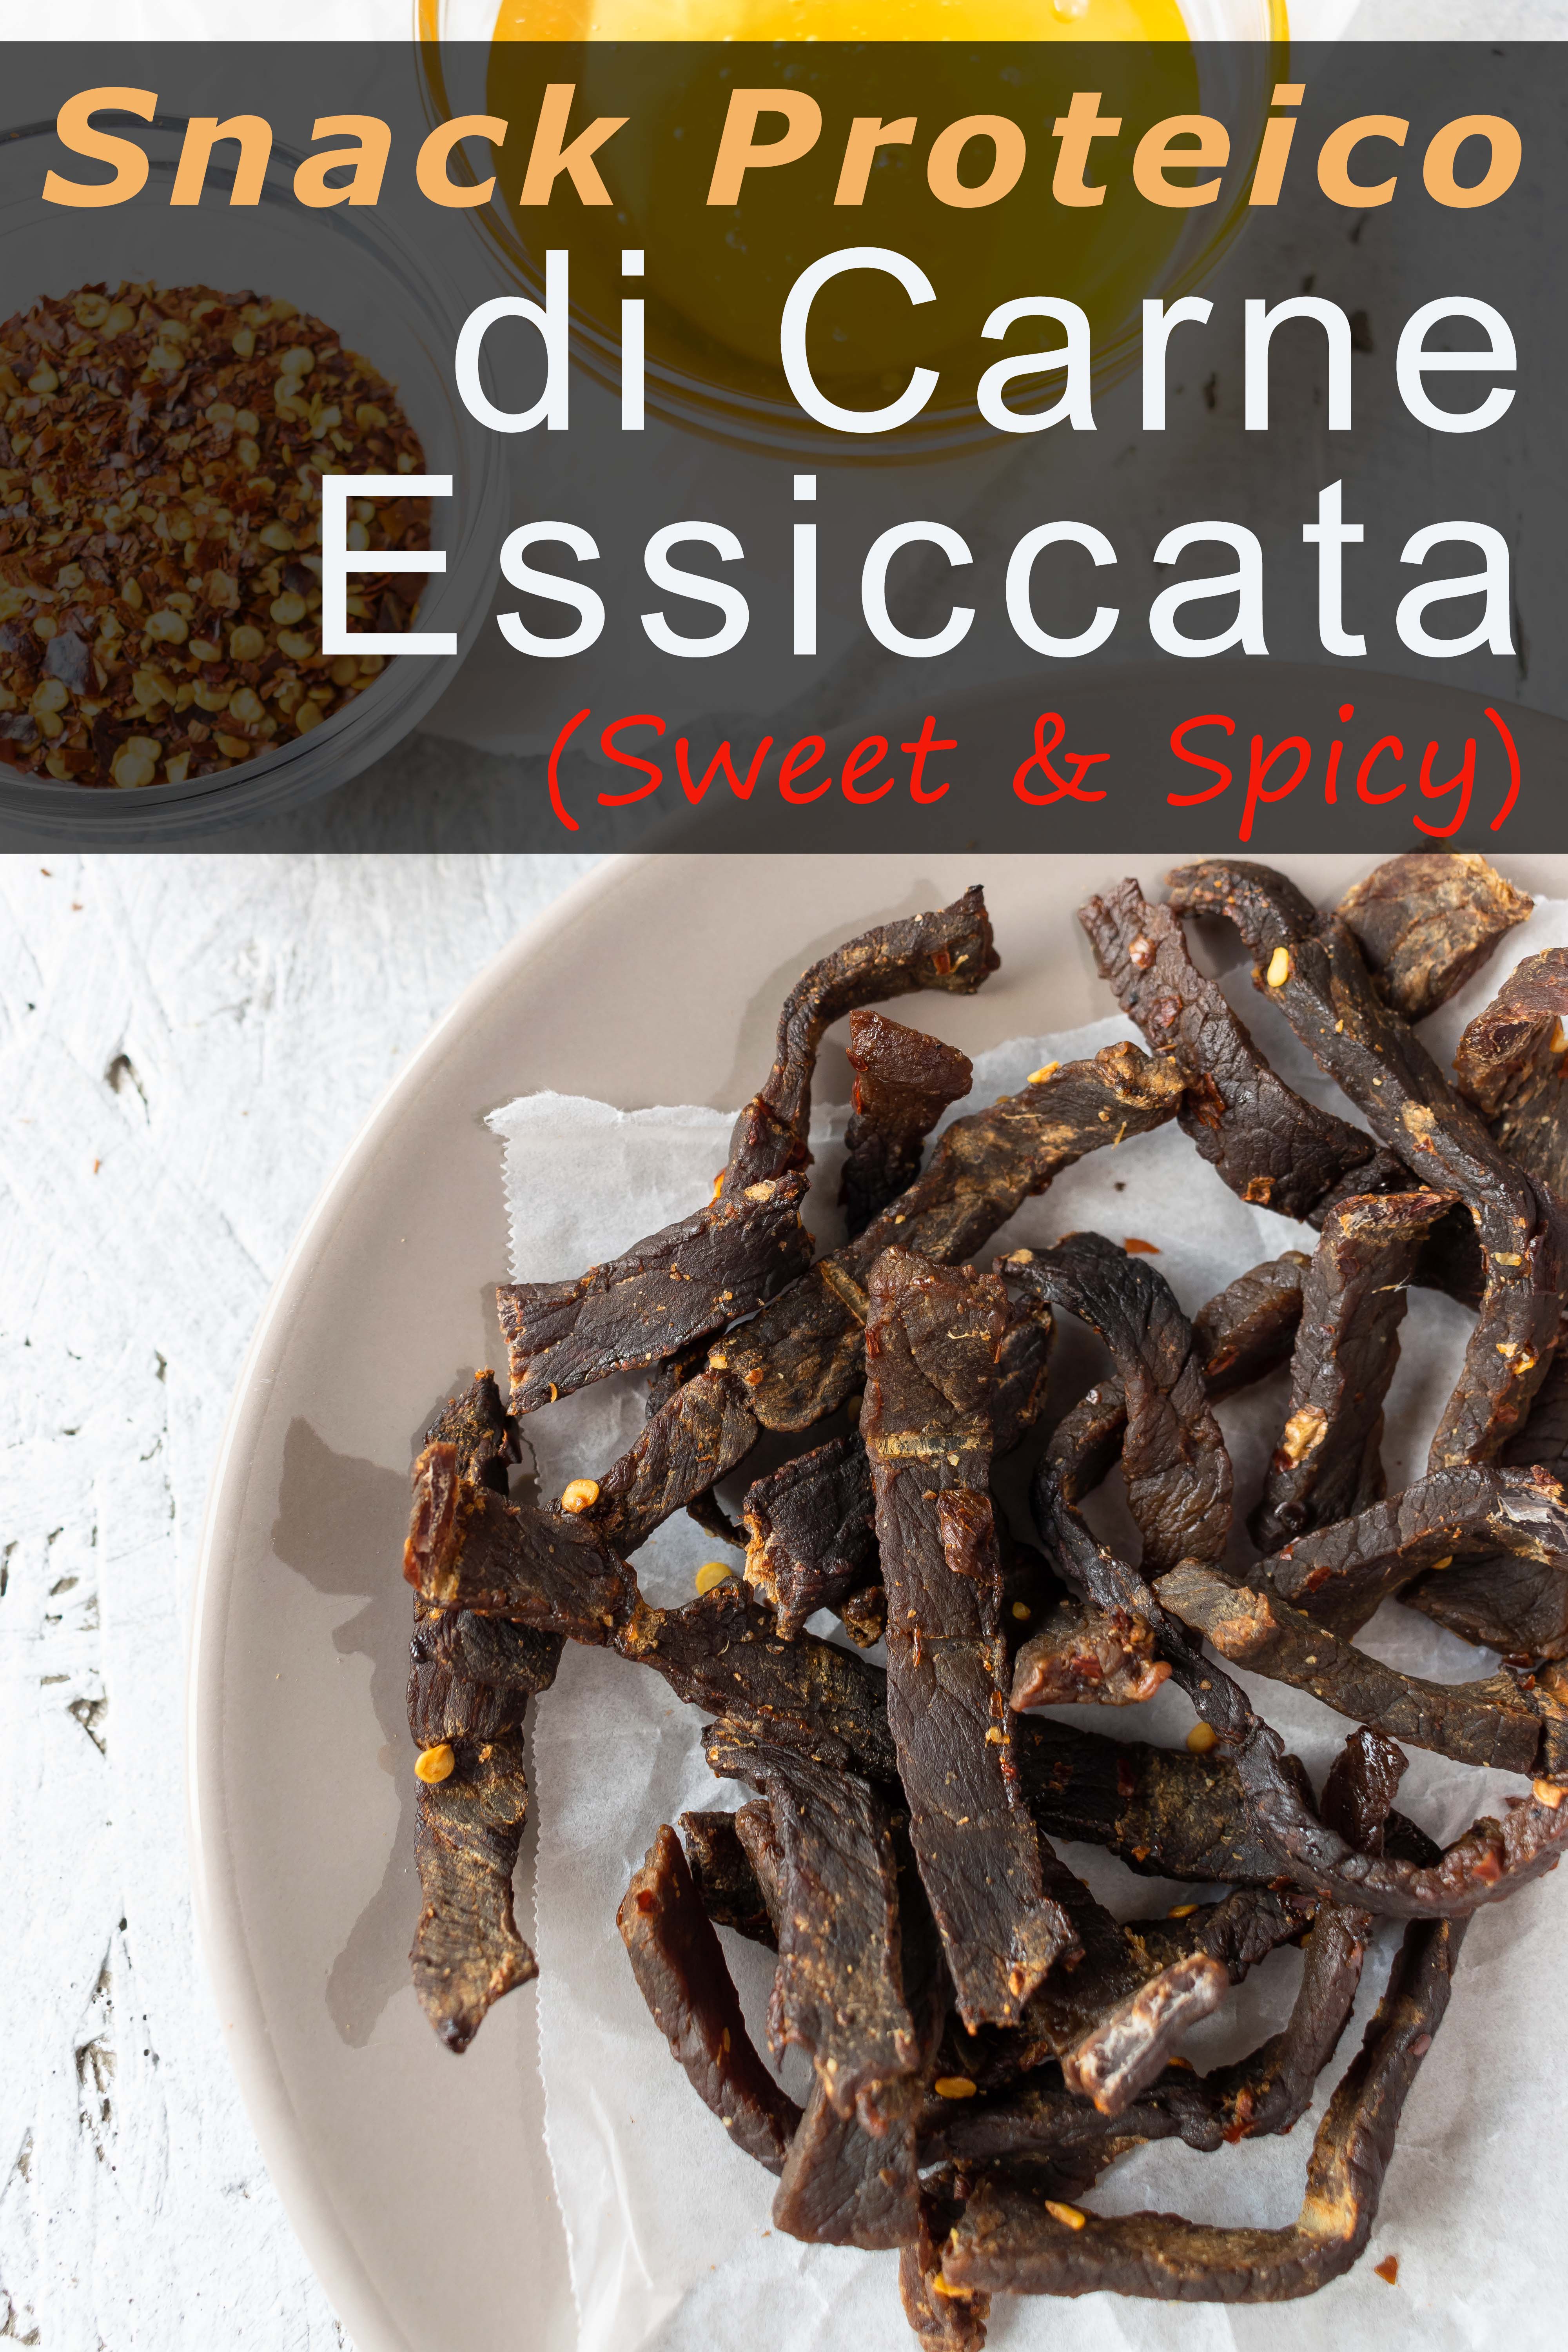 Snack Proteico Di Carne Essiccata Sweet & Spicy